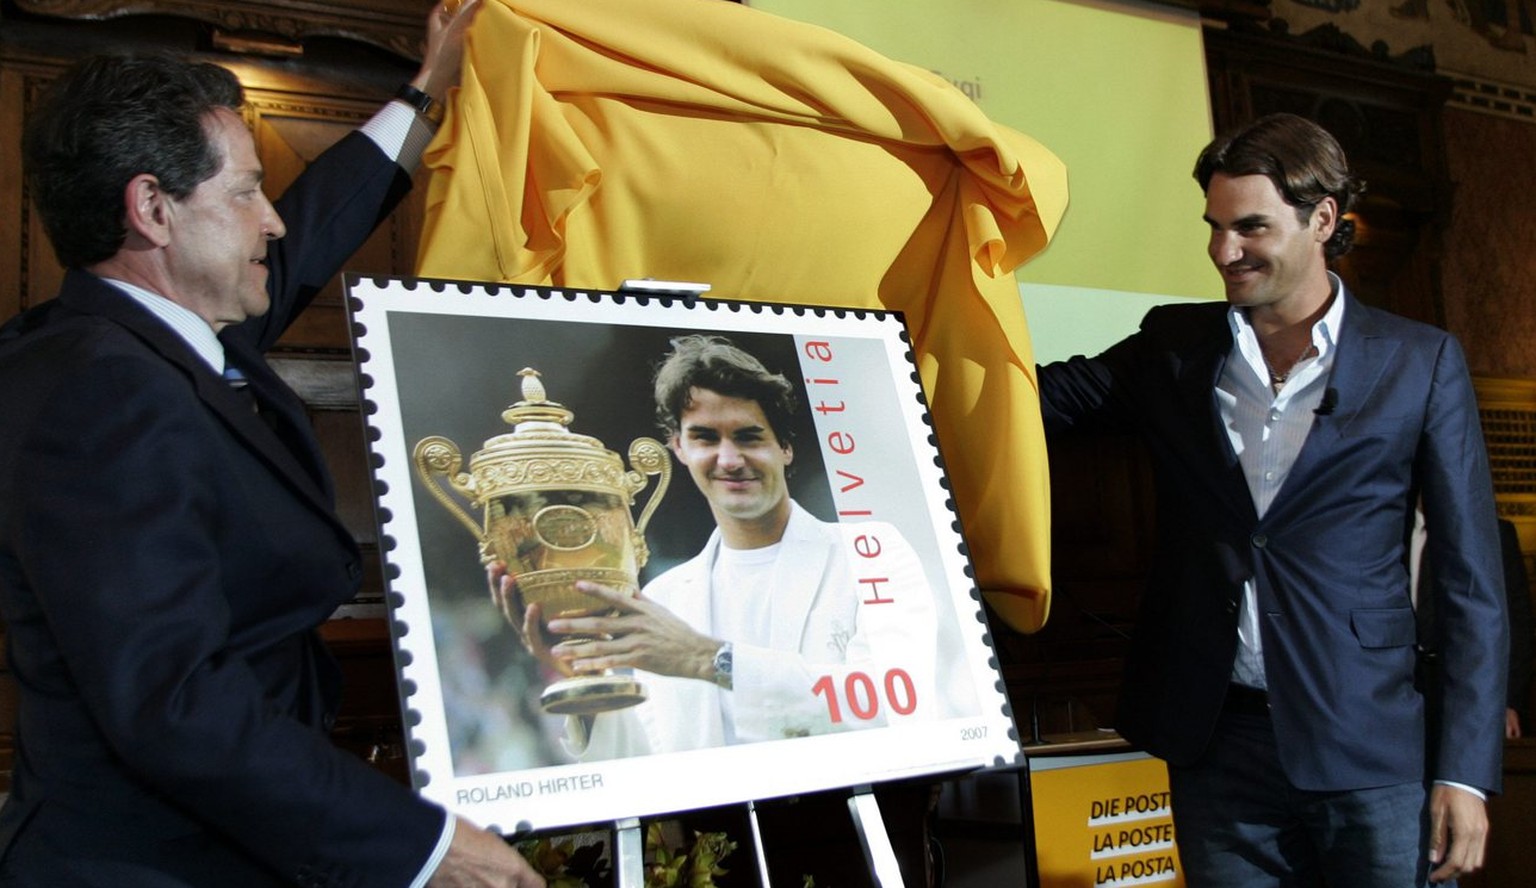 JAHRESRUECKBLICK 2007 - WIRTSCHAFT - SCHWEIZ POST SONDERBRIEFMARKE ROGER FEDERER: Ulrich Gygi, CEO Swiss Post, left, and Roger Federer, right, present the special Roger Federer stamp in the town hall  ...